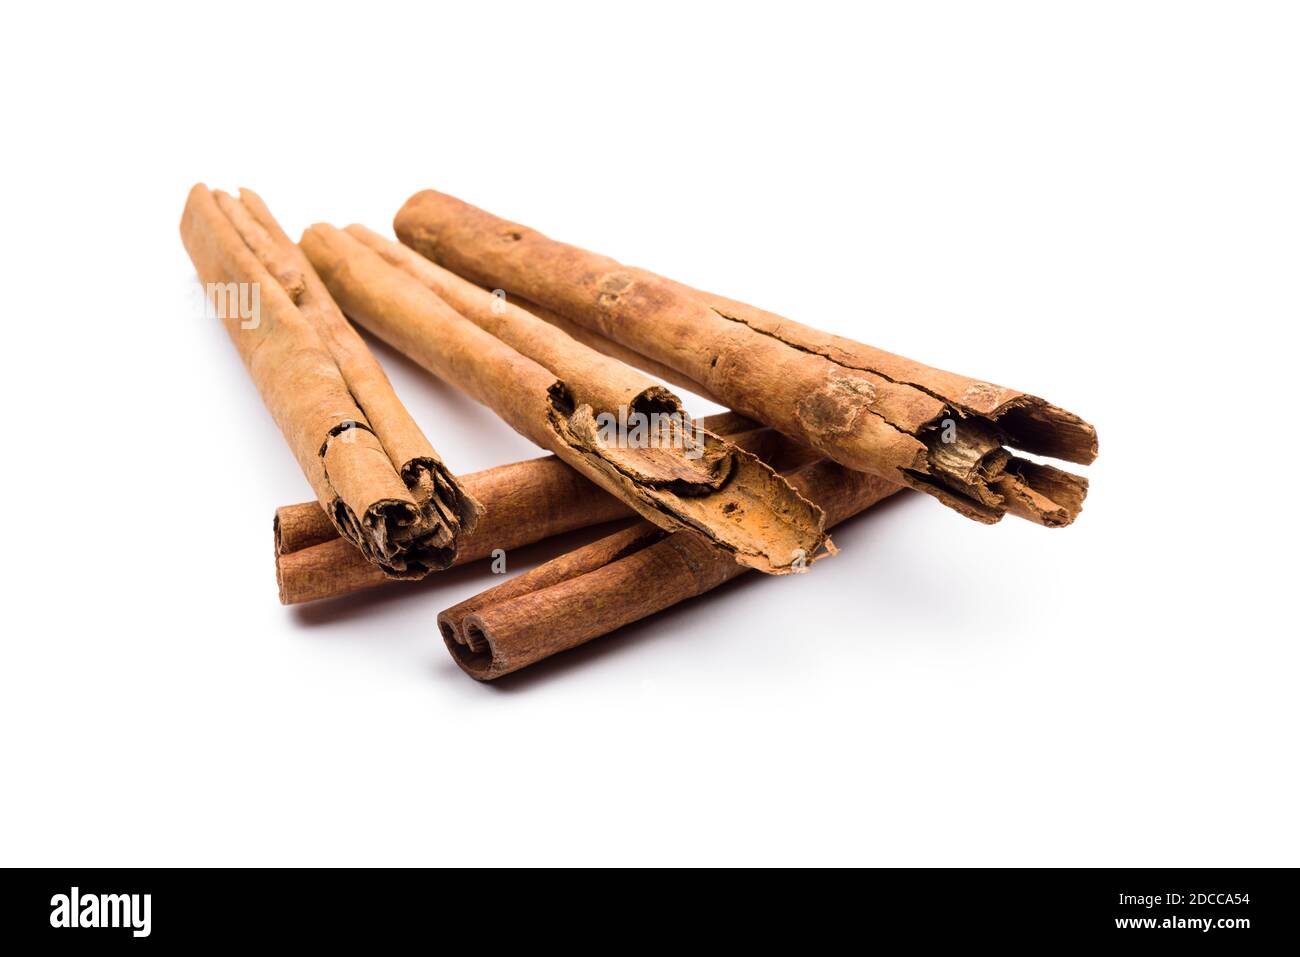 cinnamon stick composition on white background Stock Photo